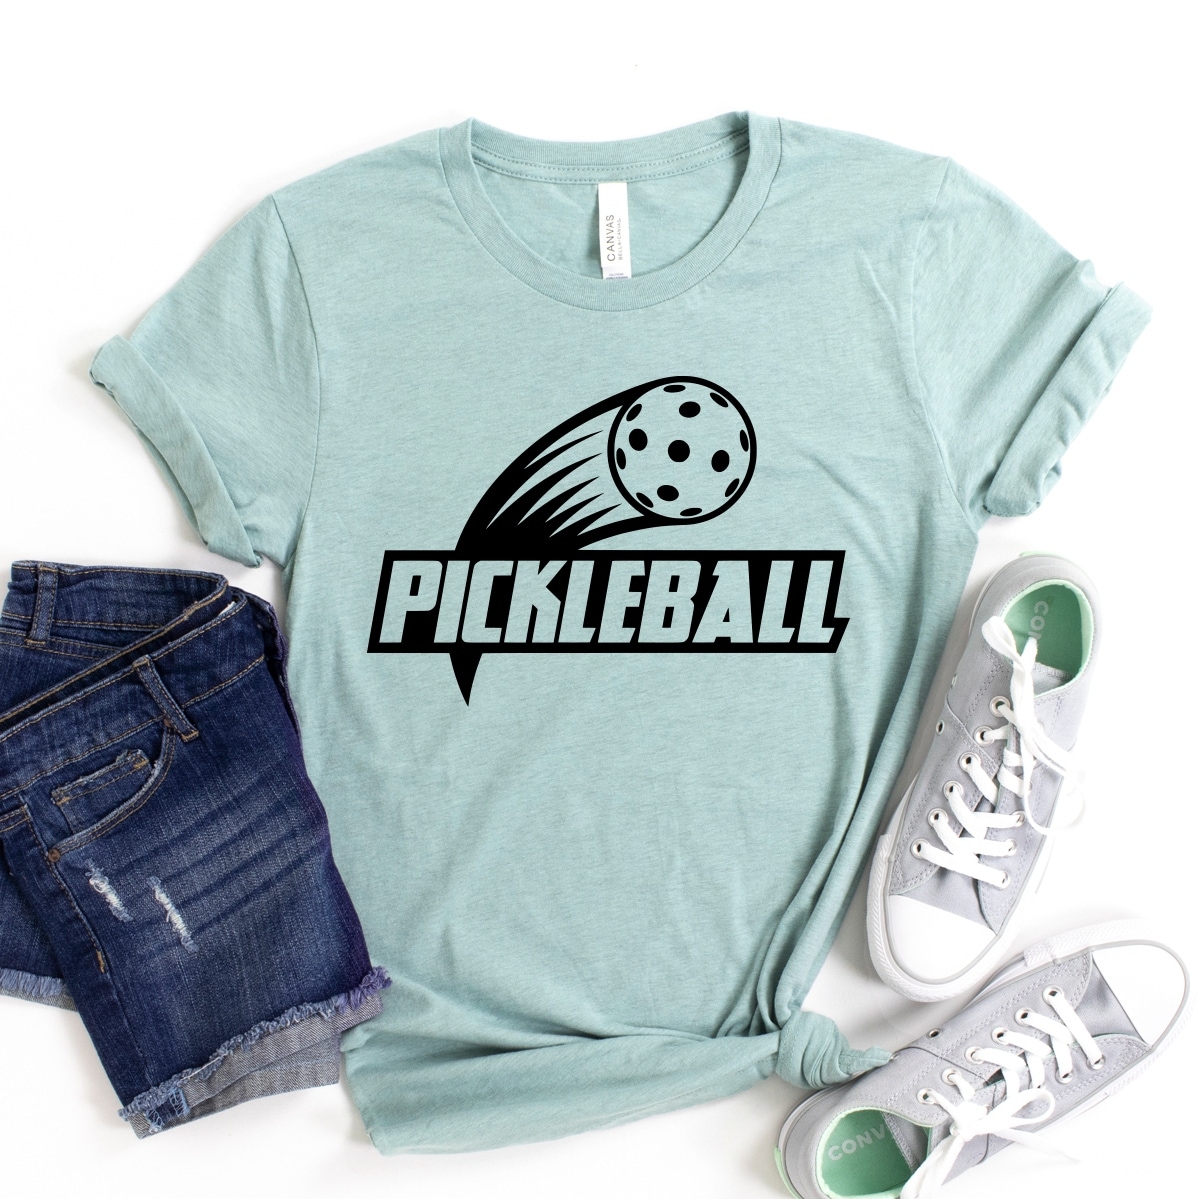 Pickleball T-Shirt, Game Day Shirt, Player Tee, Women's Coach Tshirt, Cheerleader Shirts, Birthday Gift, Team Humor Top,